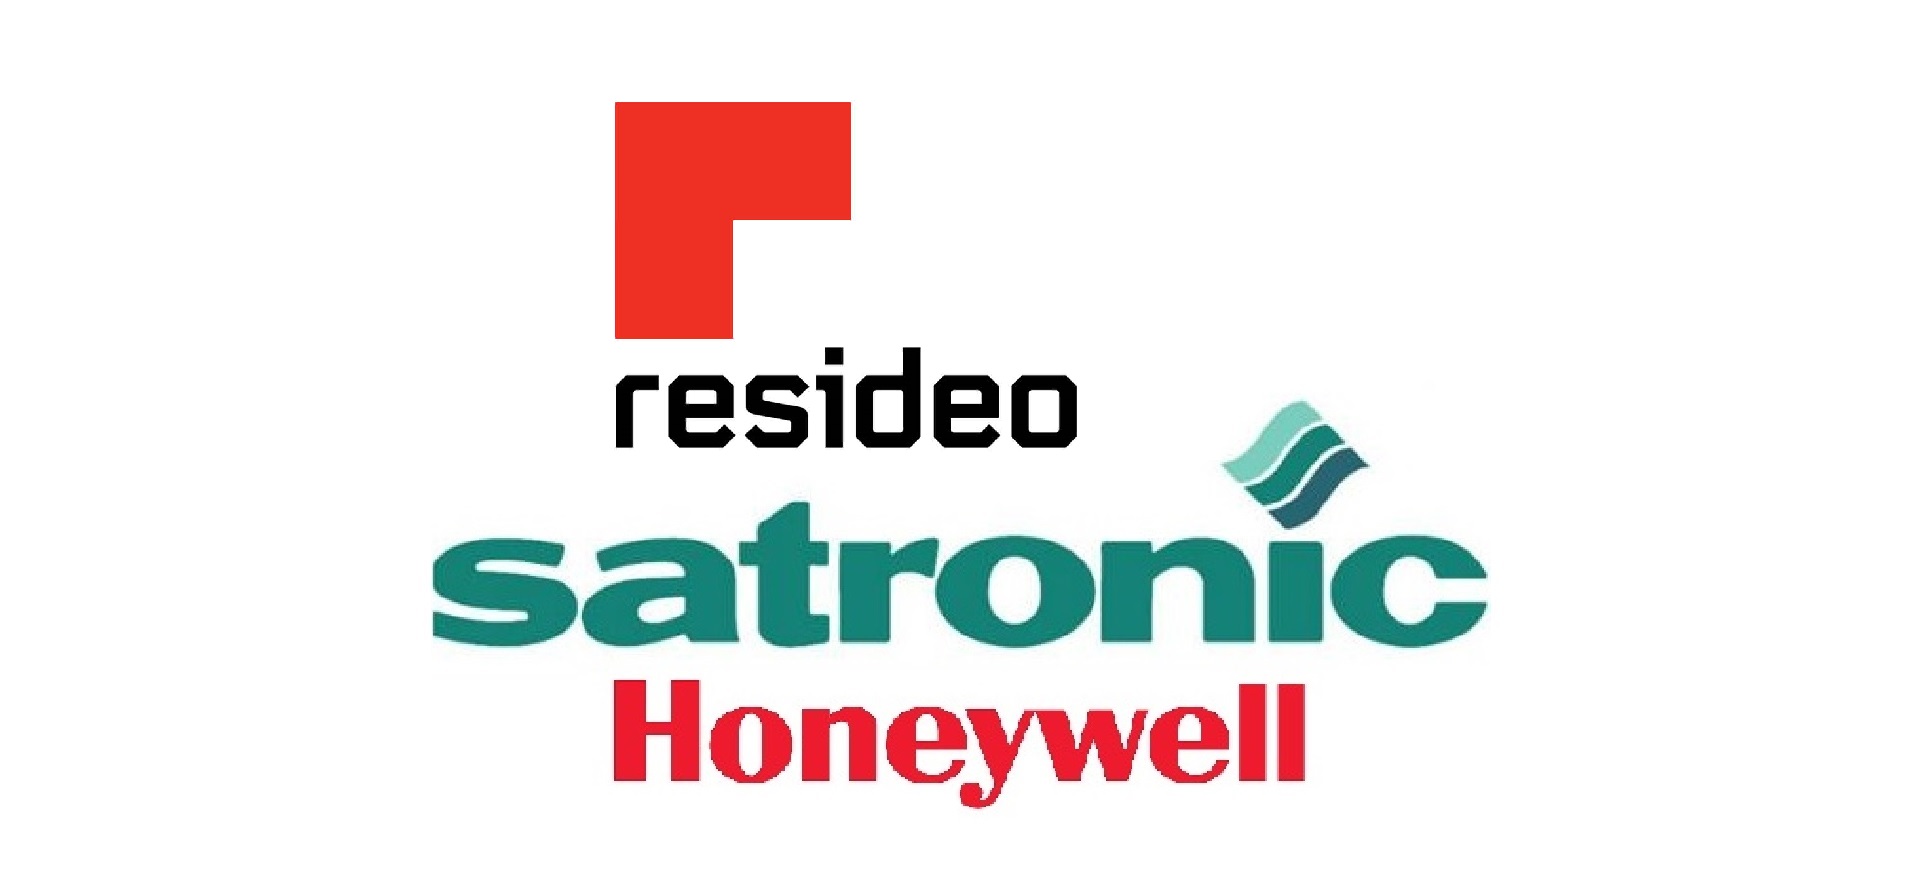 Resideo/Satronic/Honeywell